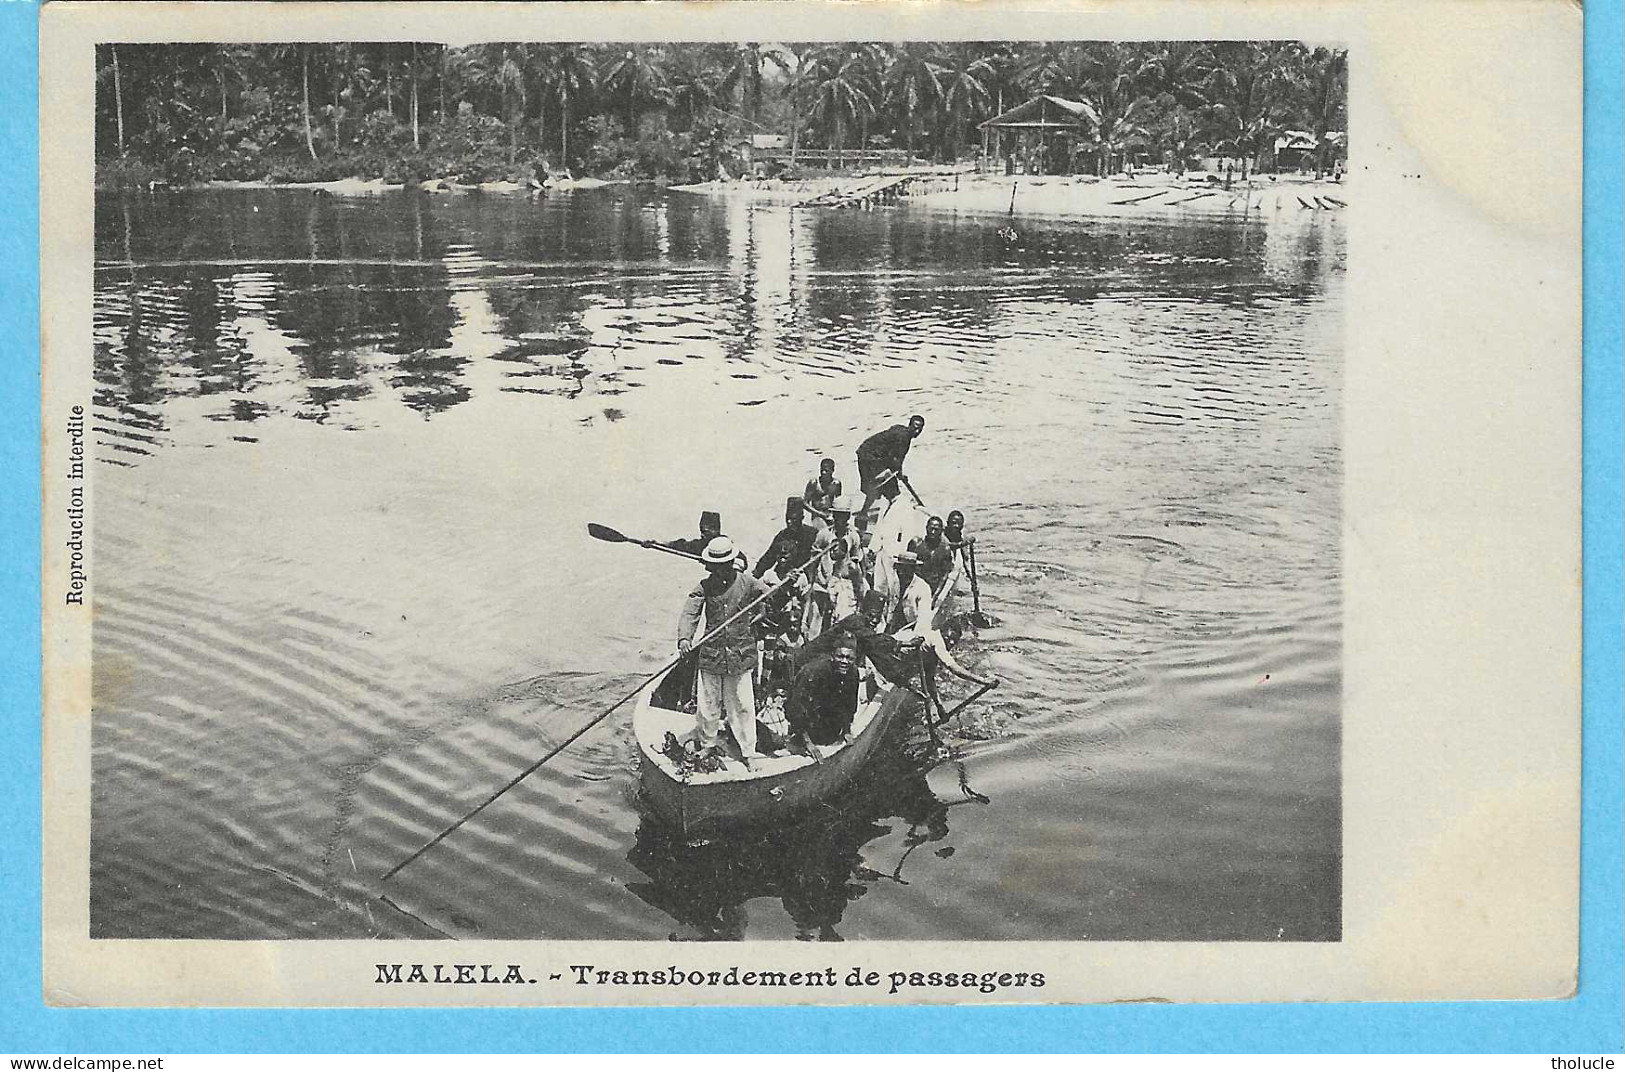 Timbre Type Mols-Congo Belge Unilingue-1909 10c Carmin-N°51-Cachet "Boma-1910"-Malela-Transbordement De Passagers-Barque - Cartas & Documentos